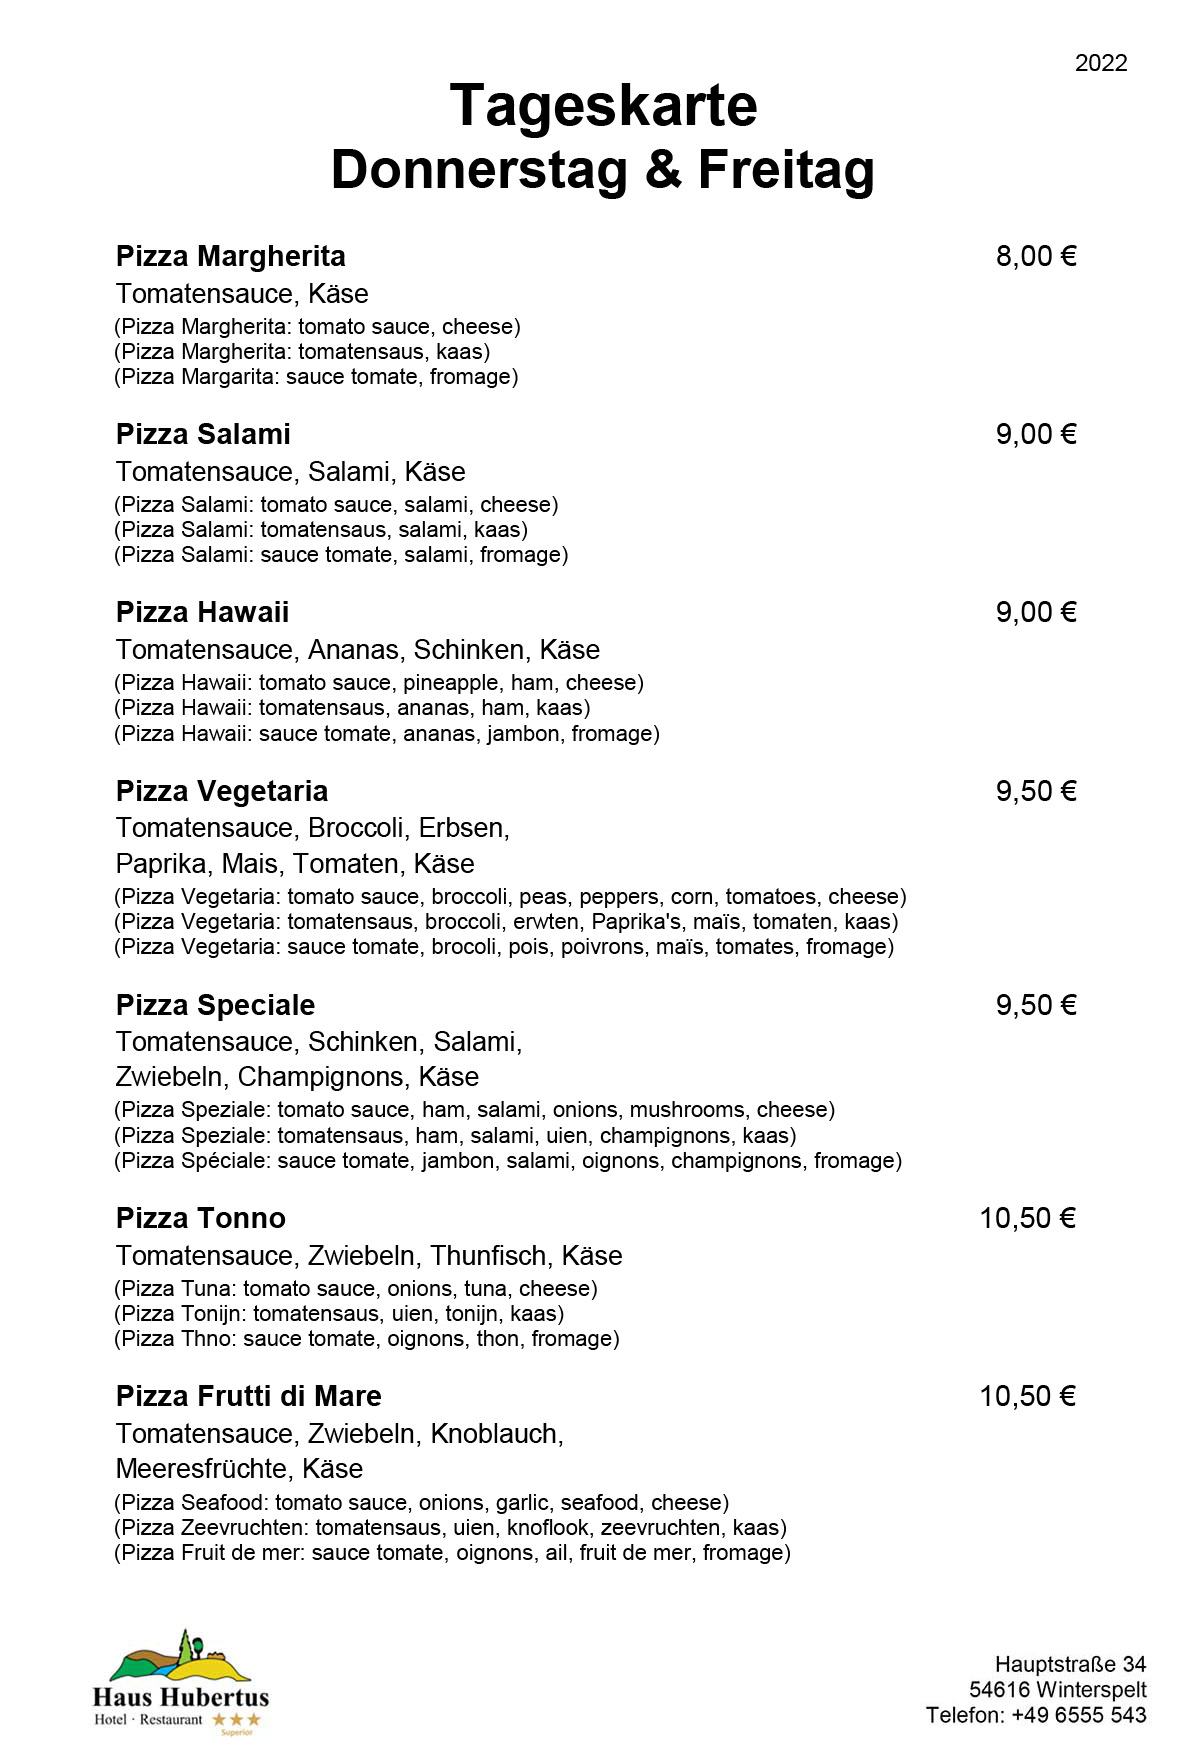 Hotel - Restaurant Haus Hubertus - Menu 2022 - Daily menu / Thursday and Friday